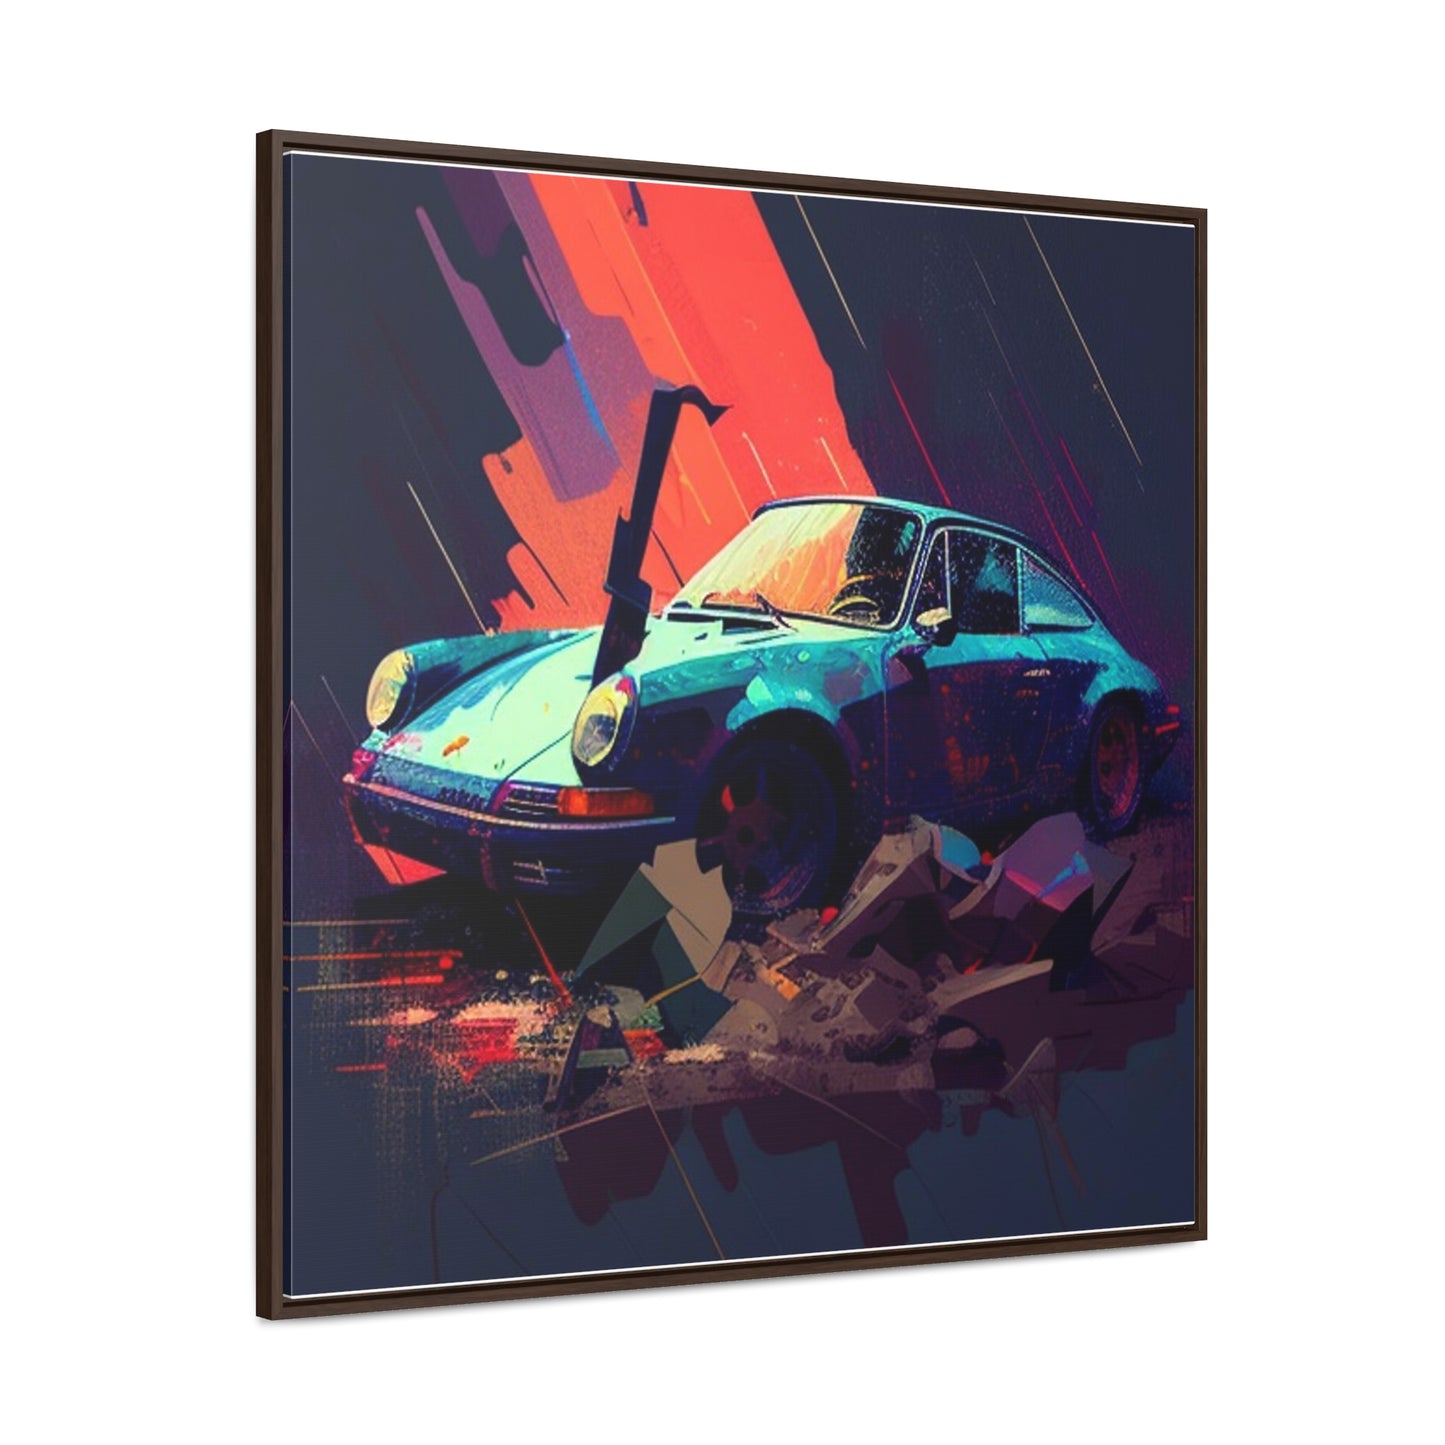 Gallery Canvas Wraps, Square Frame Porsche Abstract 2